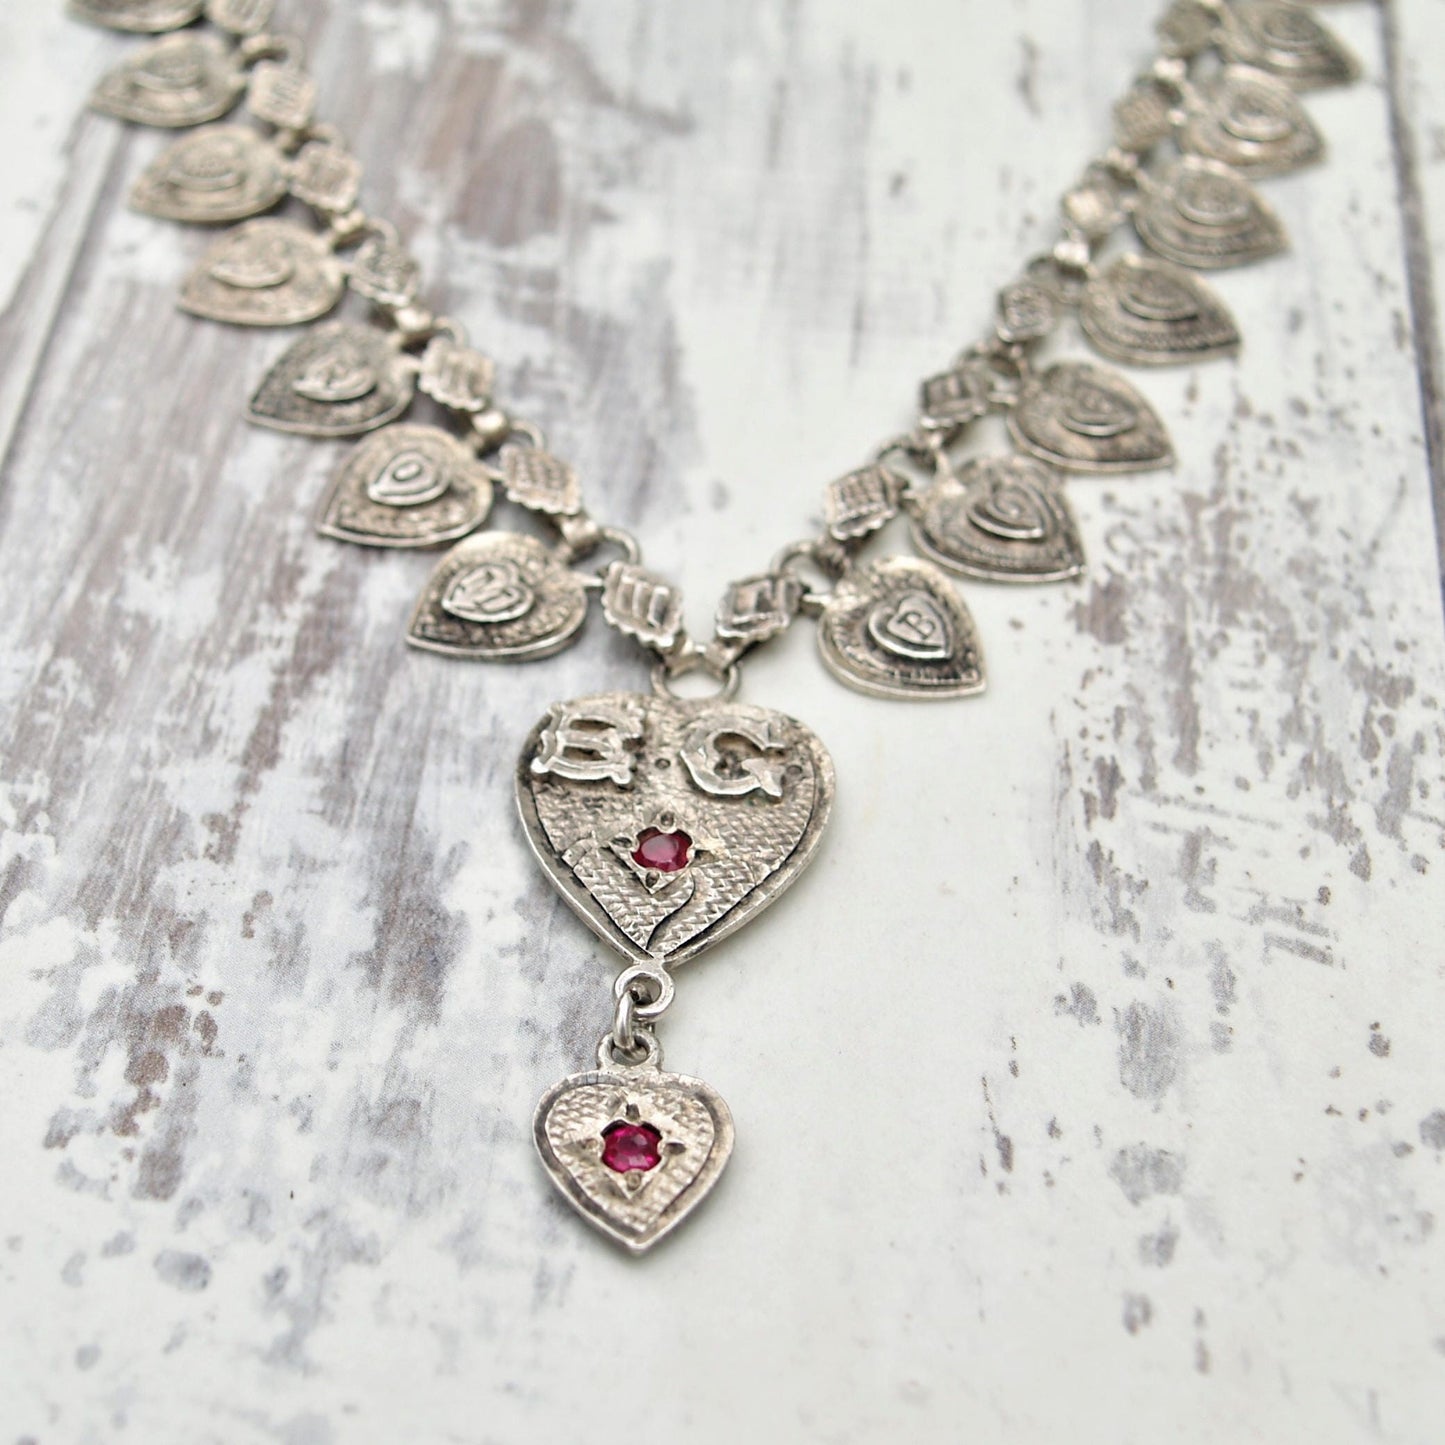 Vintage unique handmade silver heart choker necklace - 17.5 inch length